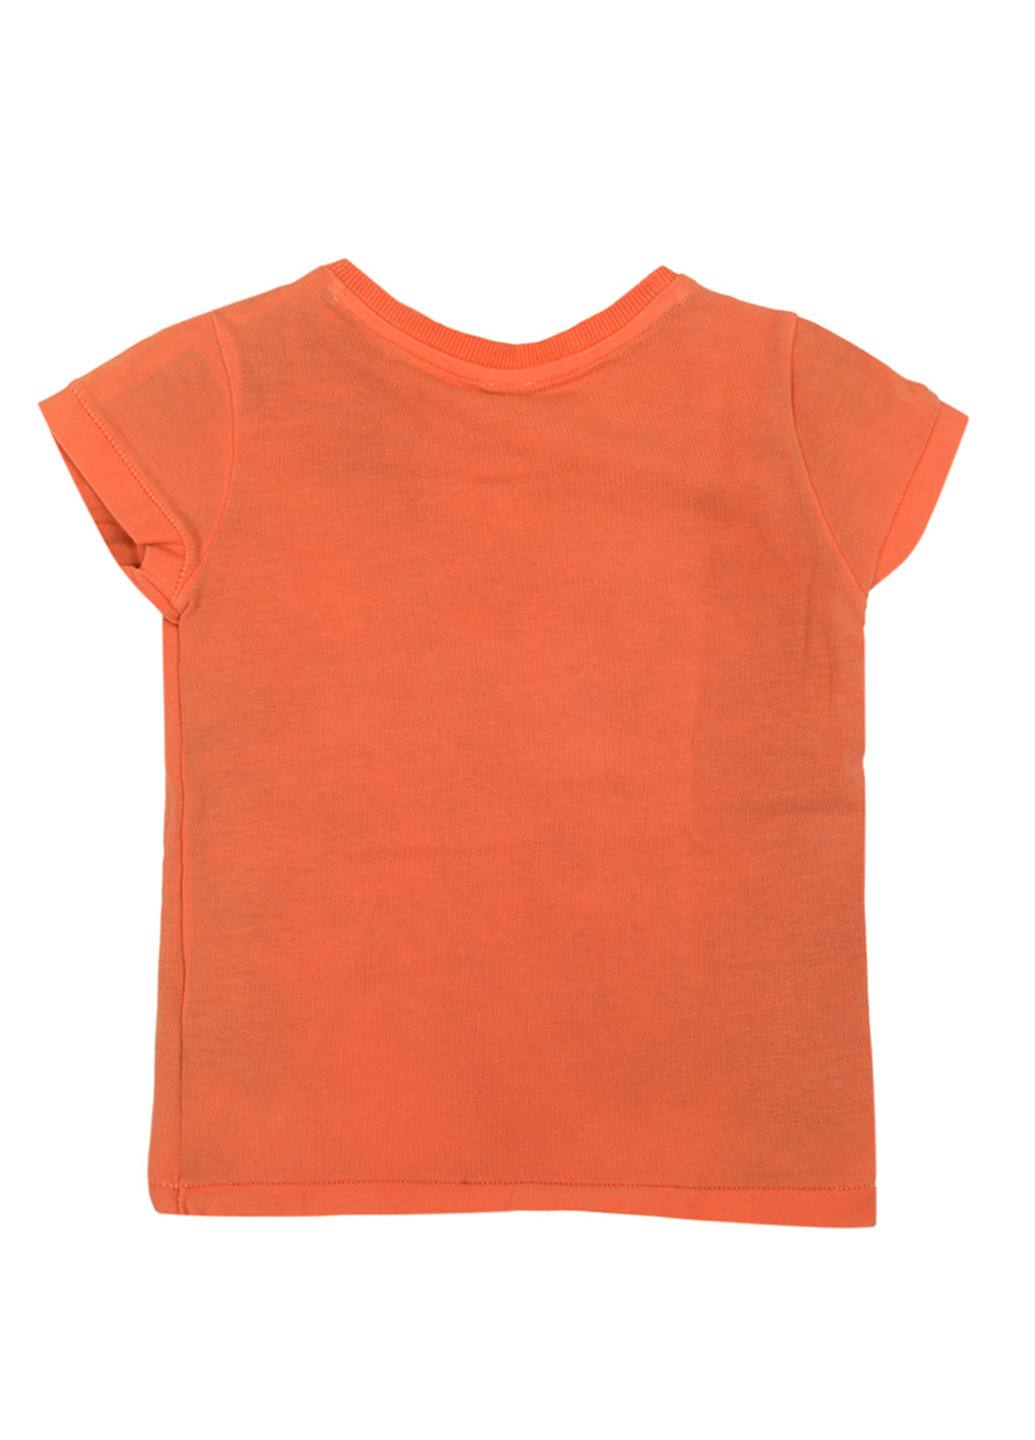 Оранжевая летняя футболка с коротким рукавом Papermoon